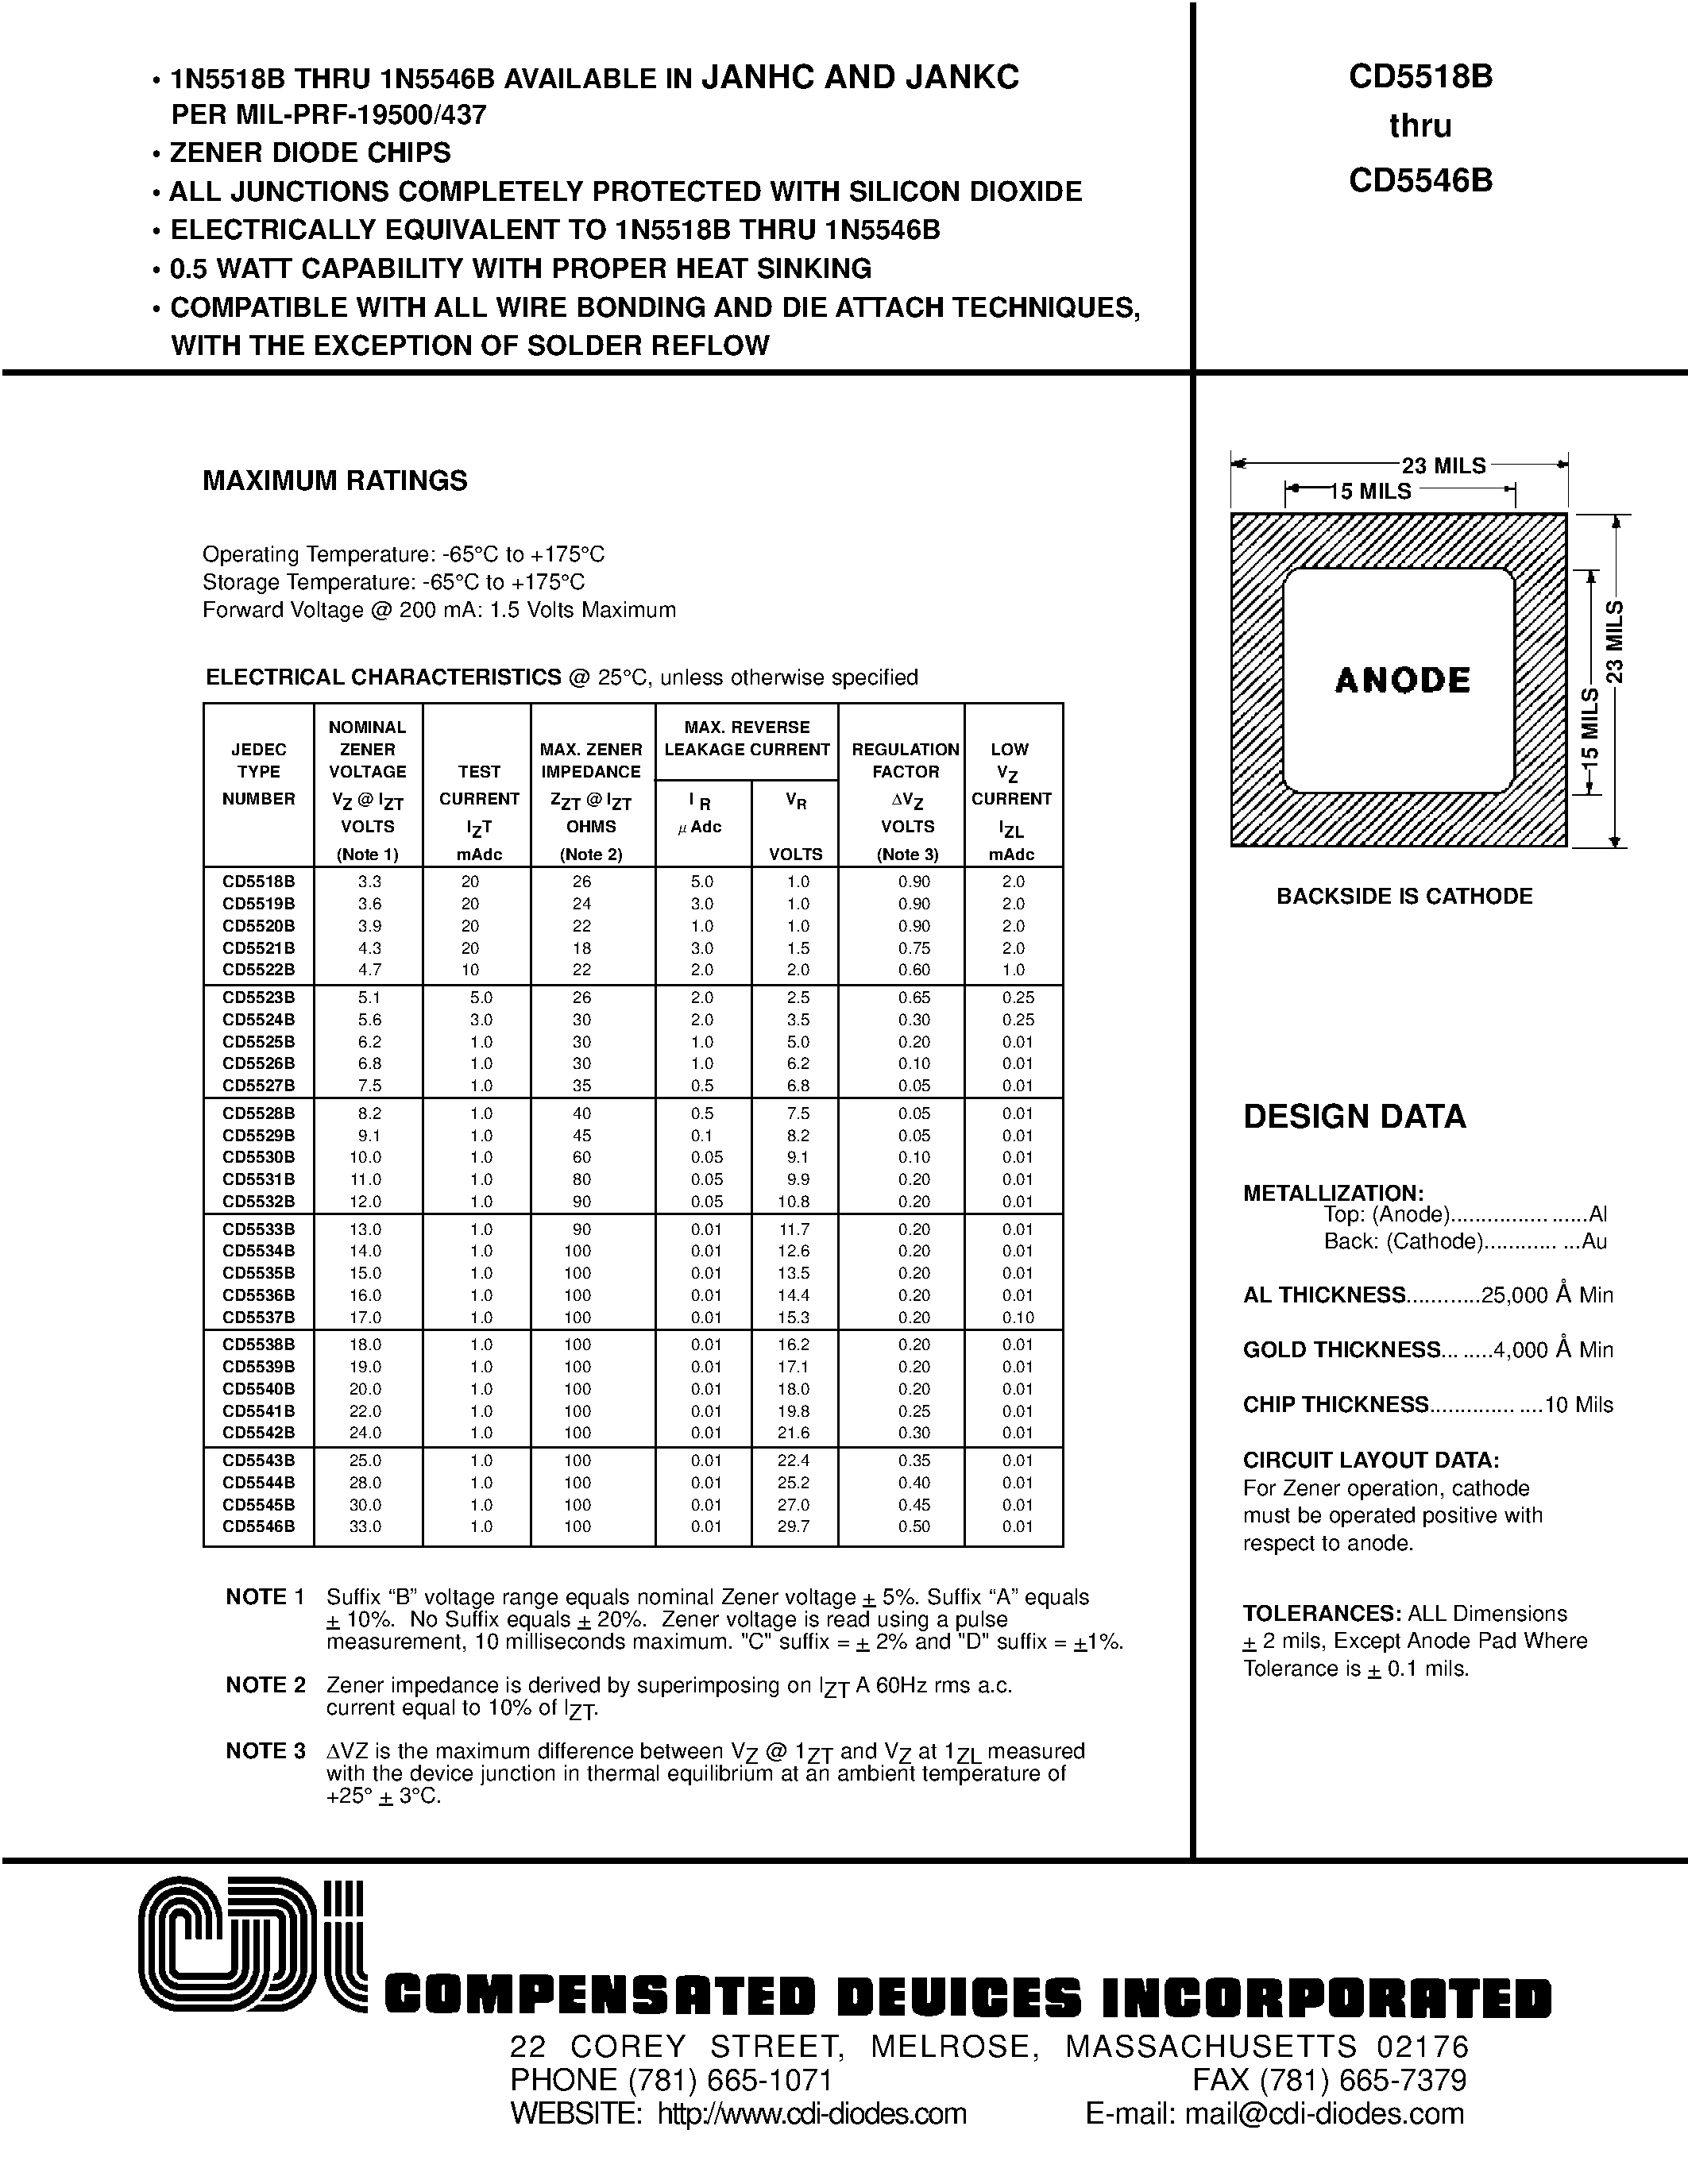 Datasheet CD5544B - ZENER DIODE CHIPS page 1